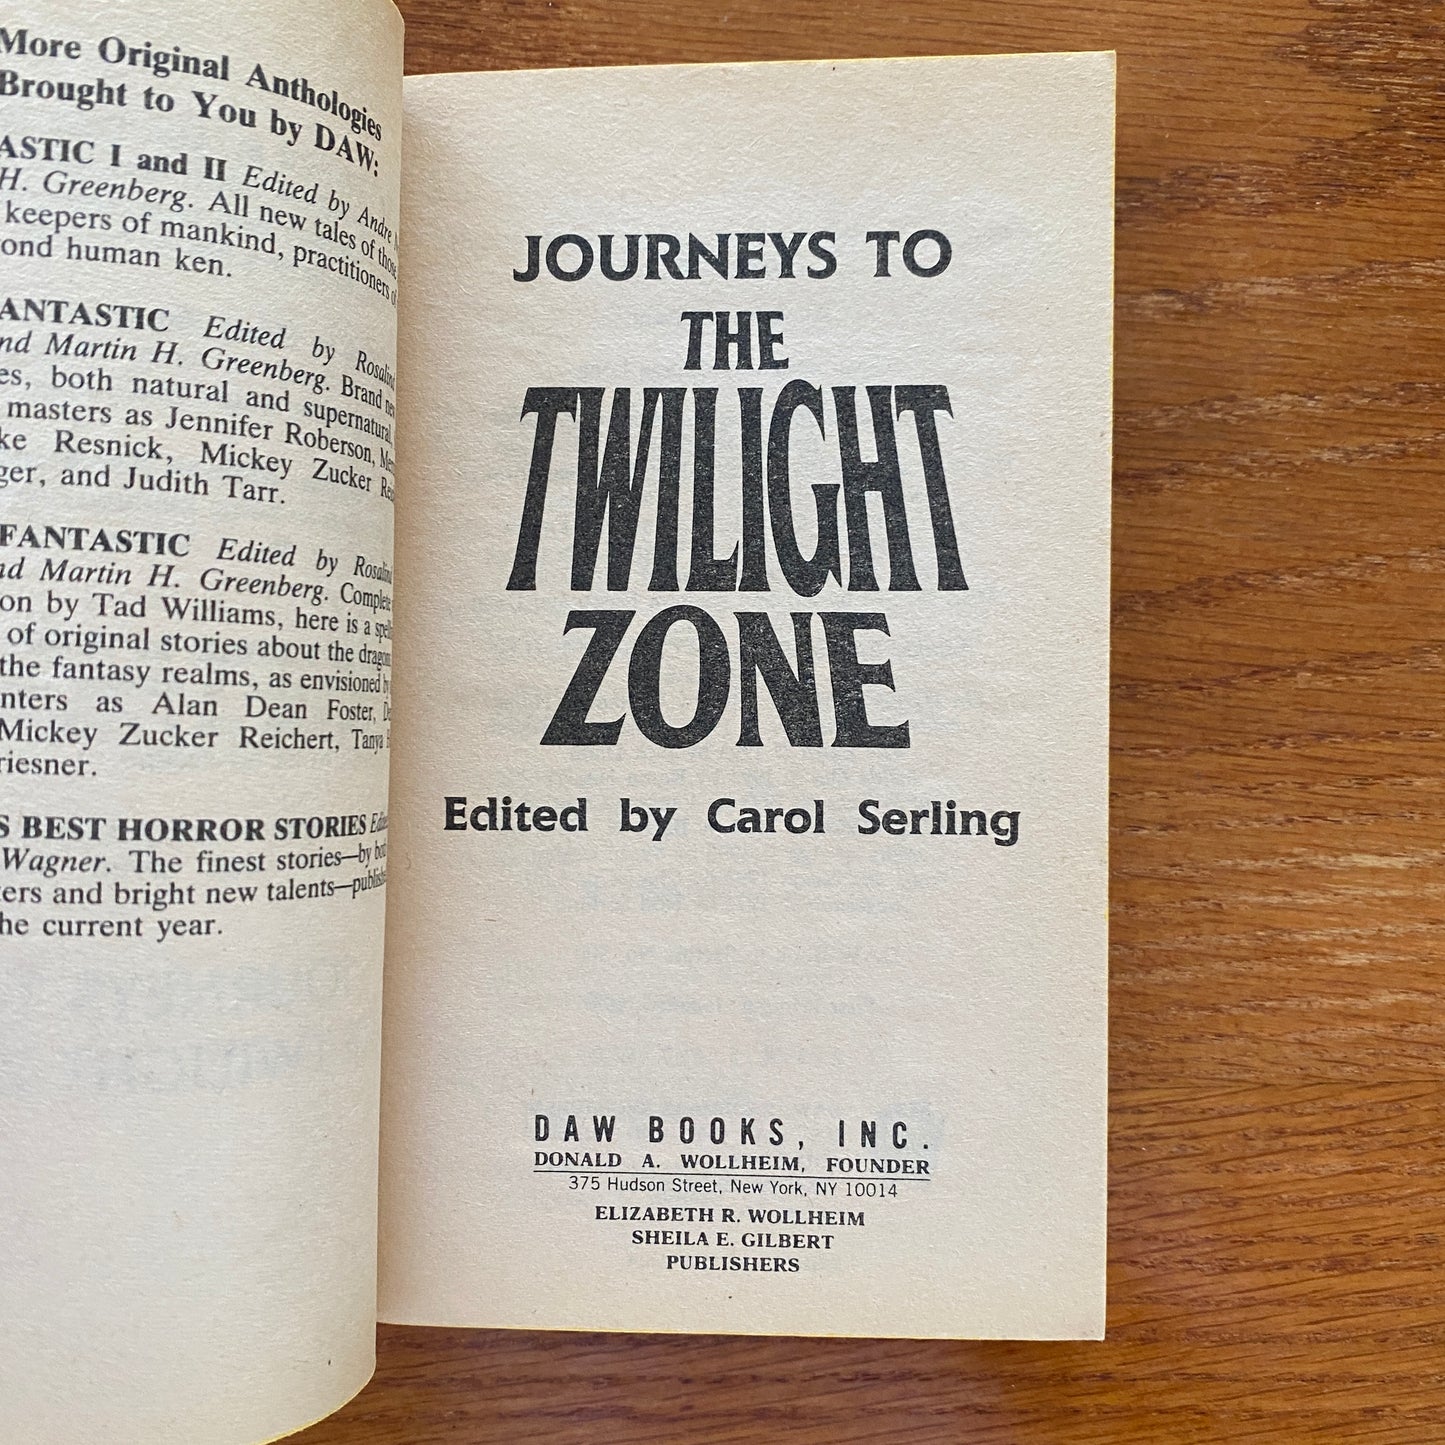 The Twilight Zone - Carol Serling